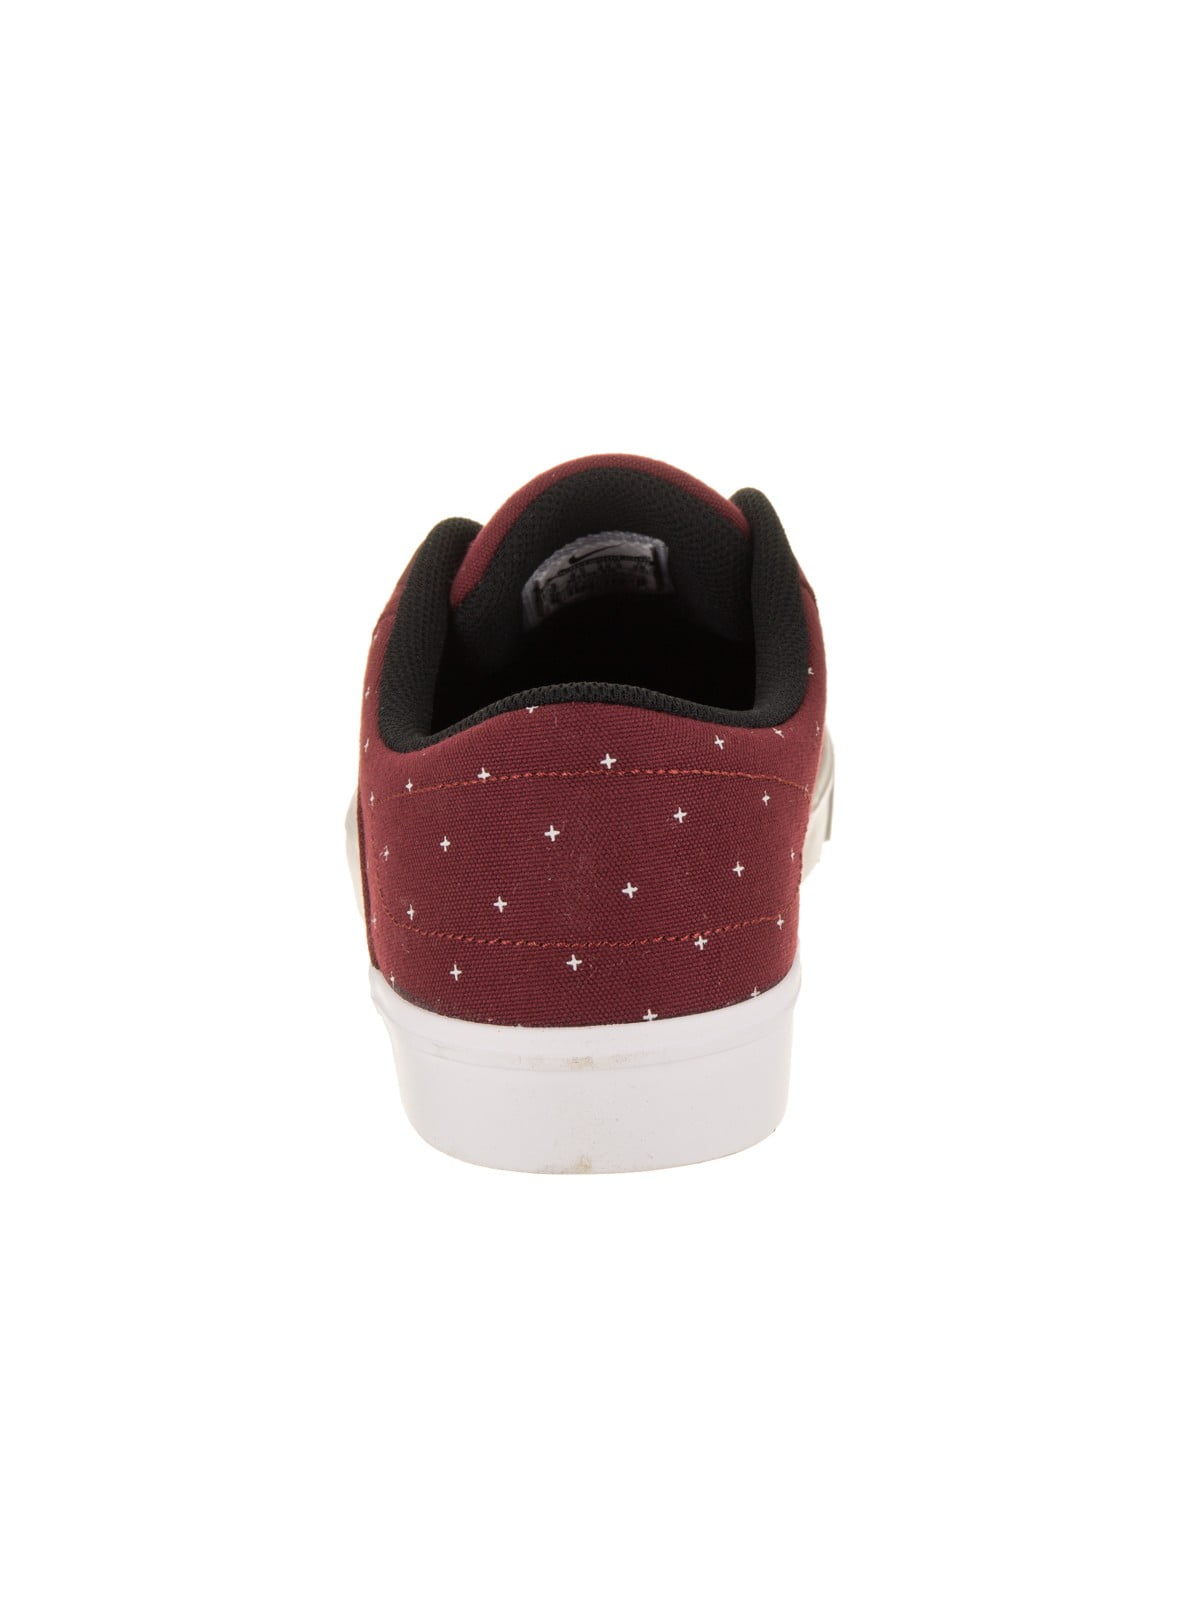 Men's Nike SB Portmore Canvas Casual Shoes Red/Grey Walmart.com